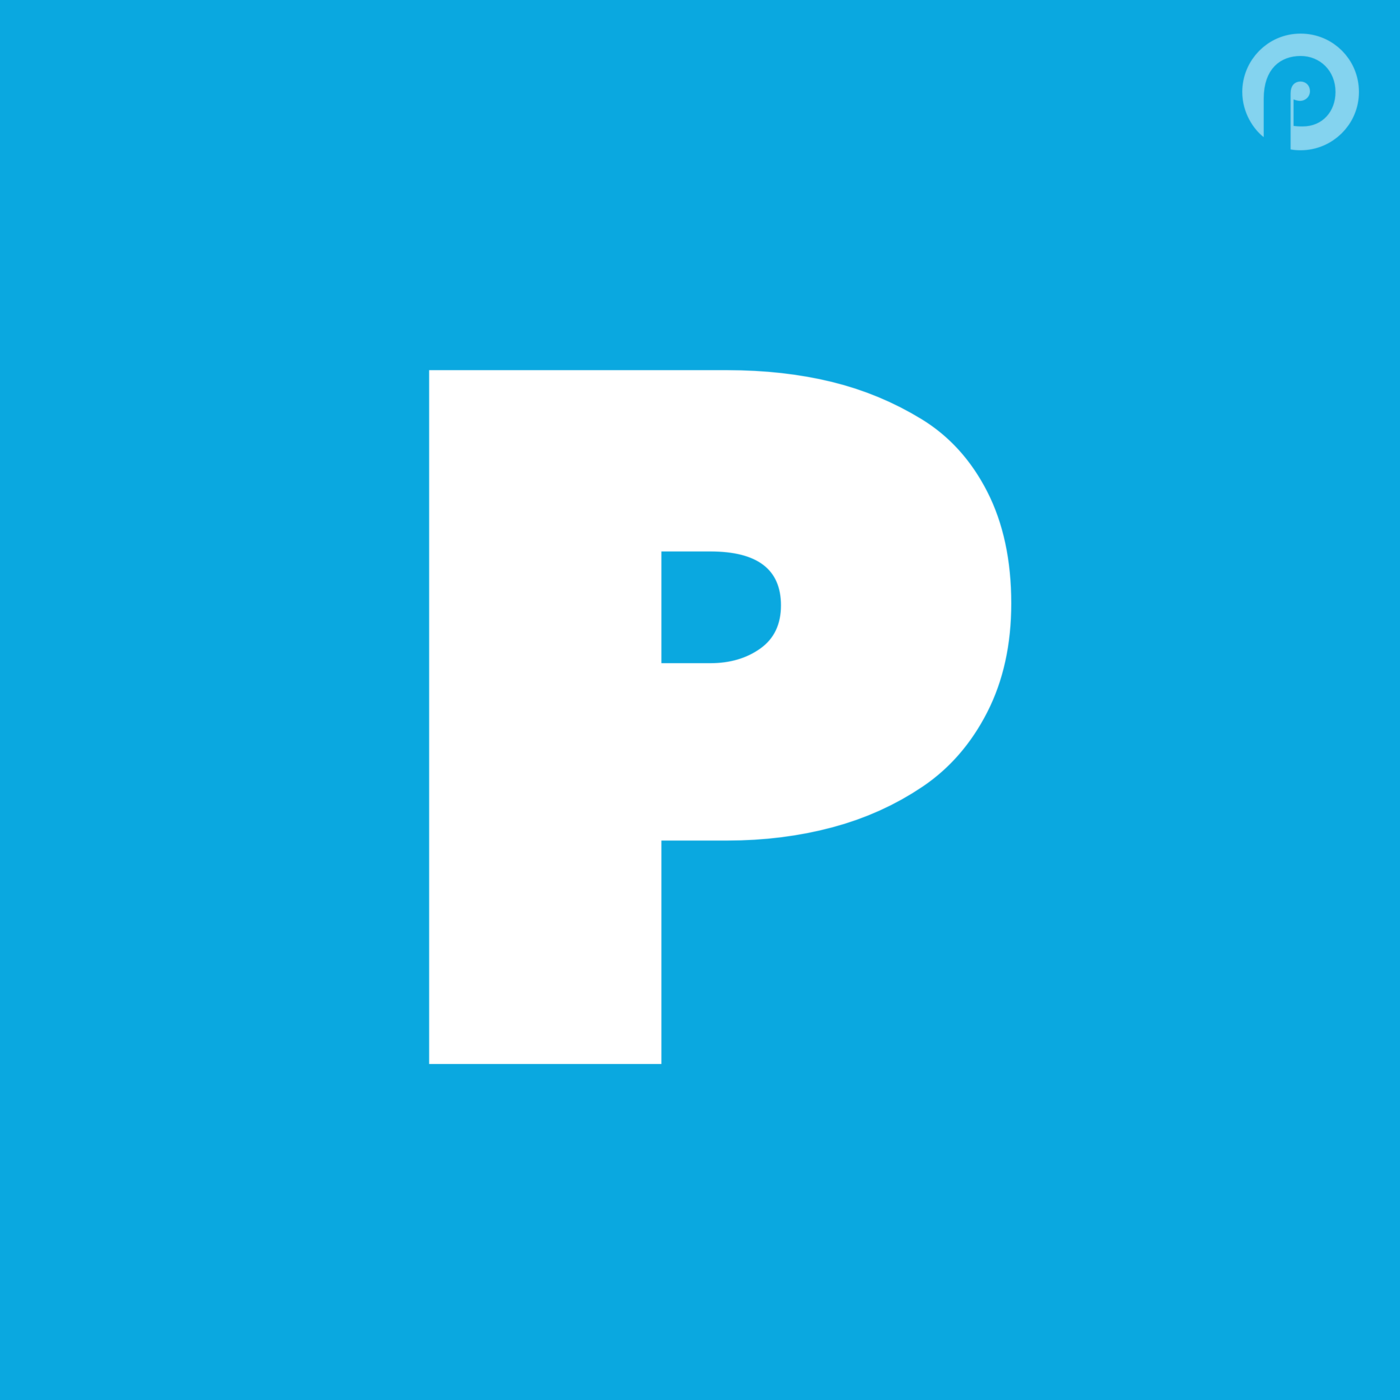 Plastik Phil Presents Plastik Philosophys Podcast